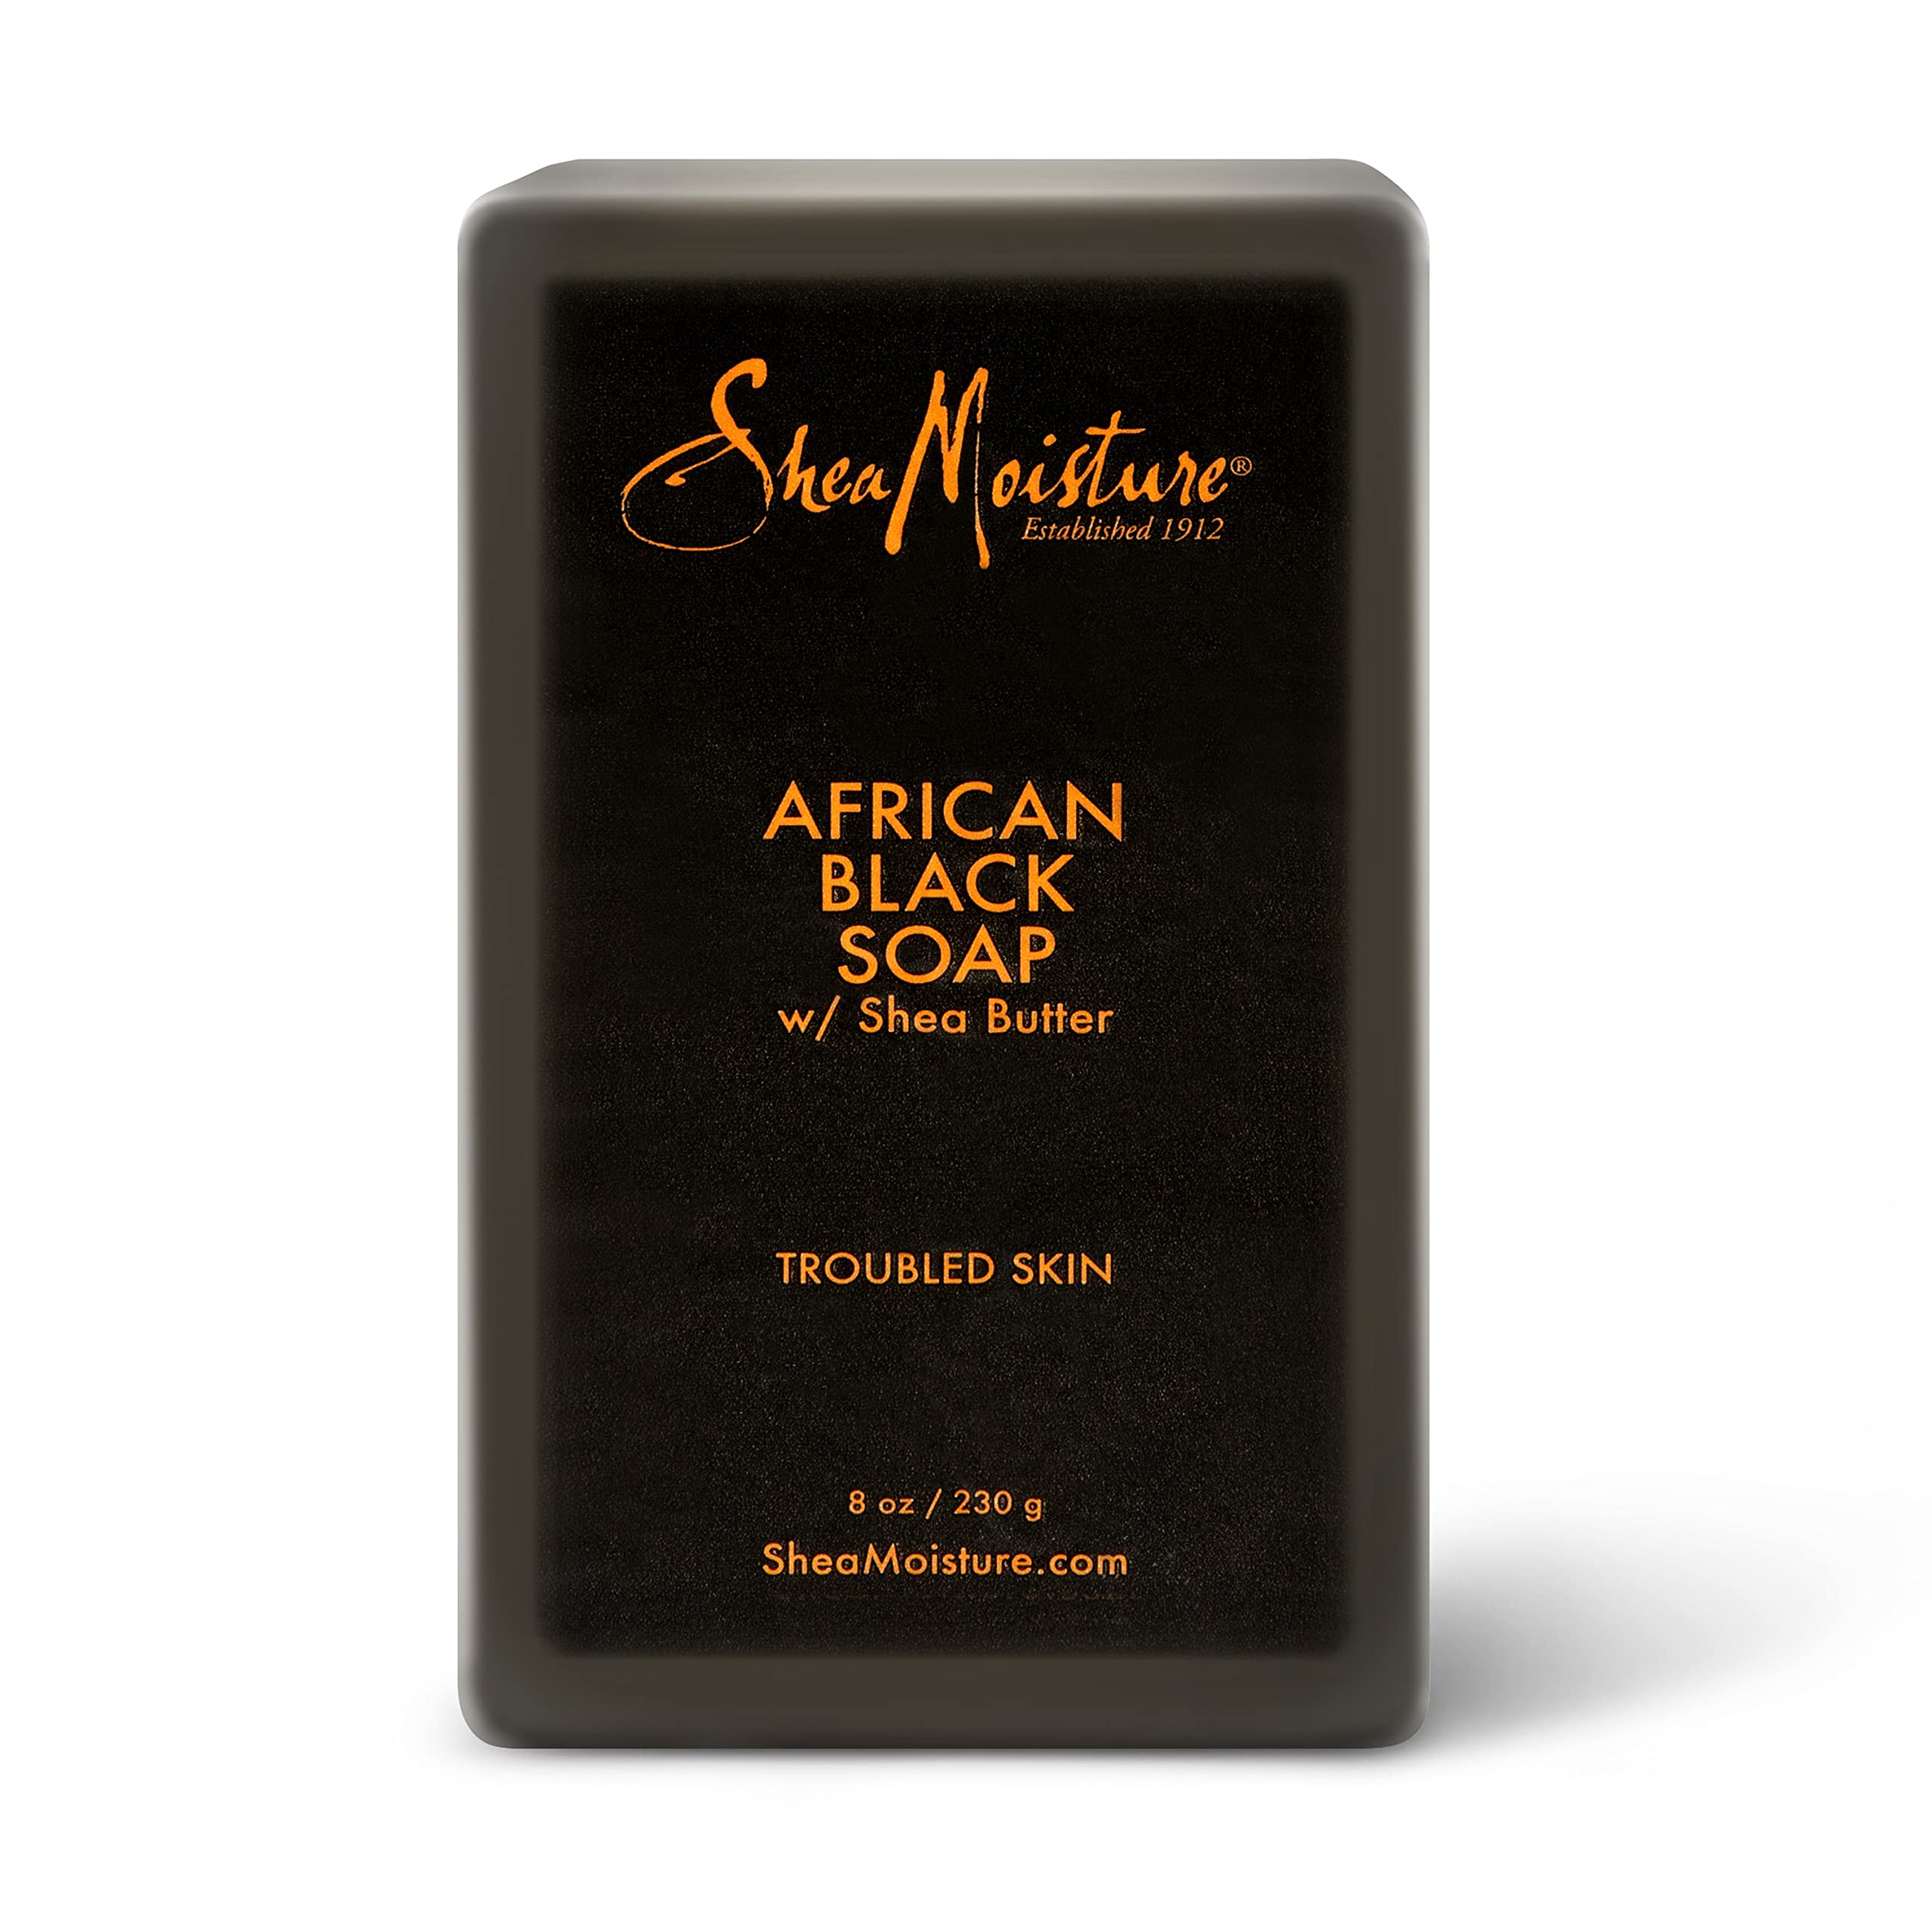 Shea moisture Organic African Black Soap Bar with Shea Butter, 8oz